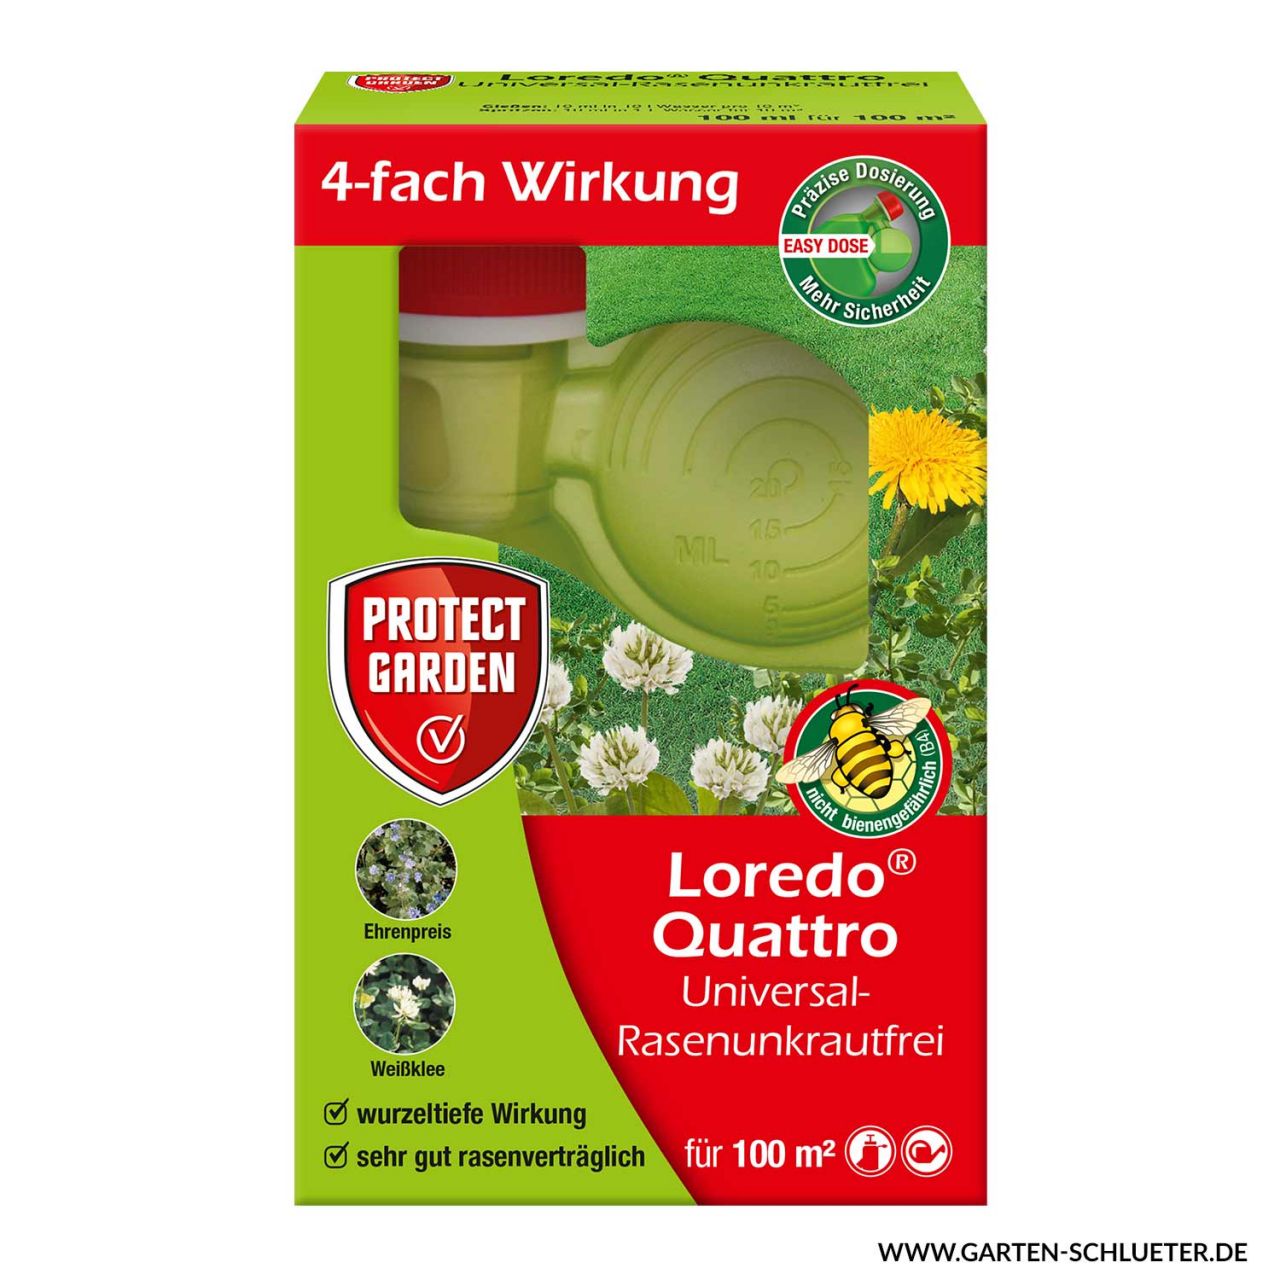 Protect Garden Universal-Rasenunkrautfrei ‚Loredo® Quattro‘